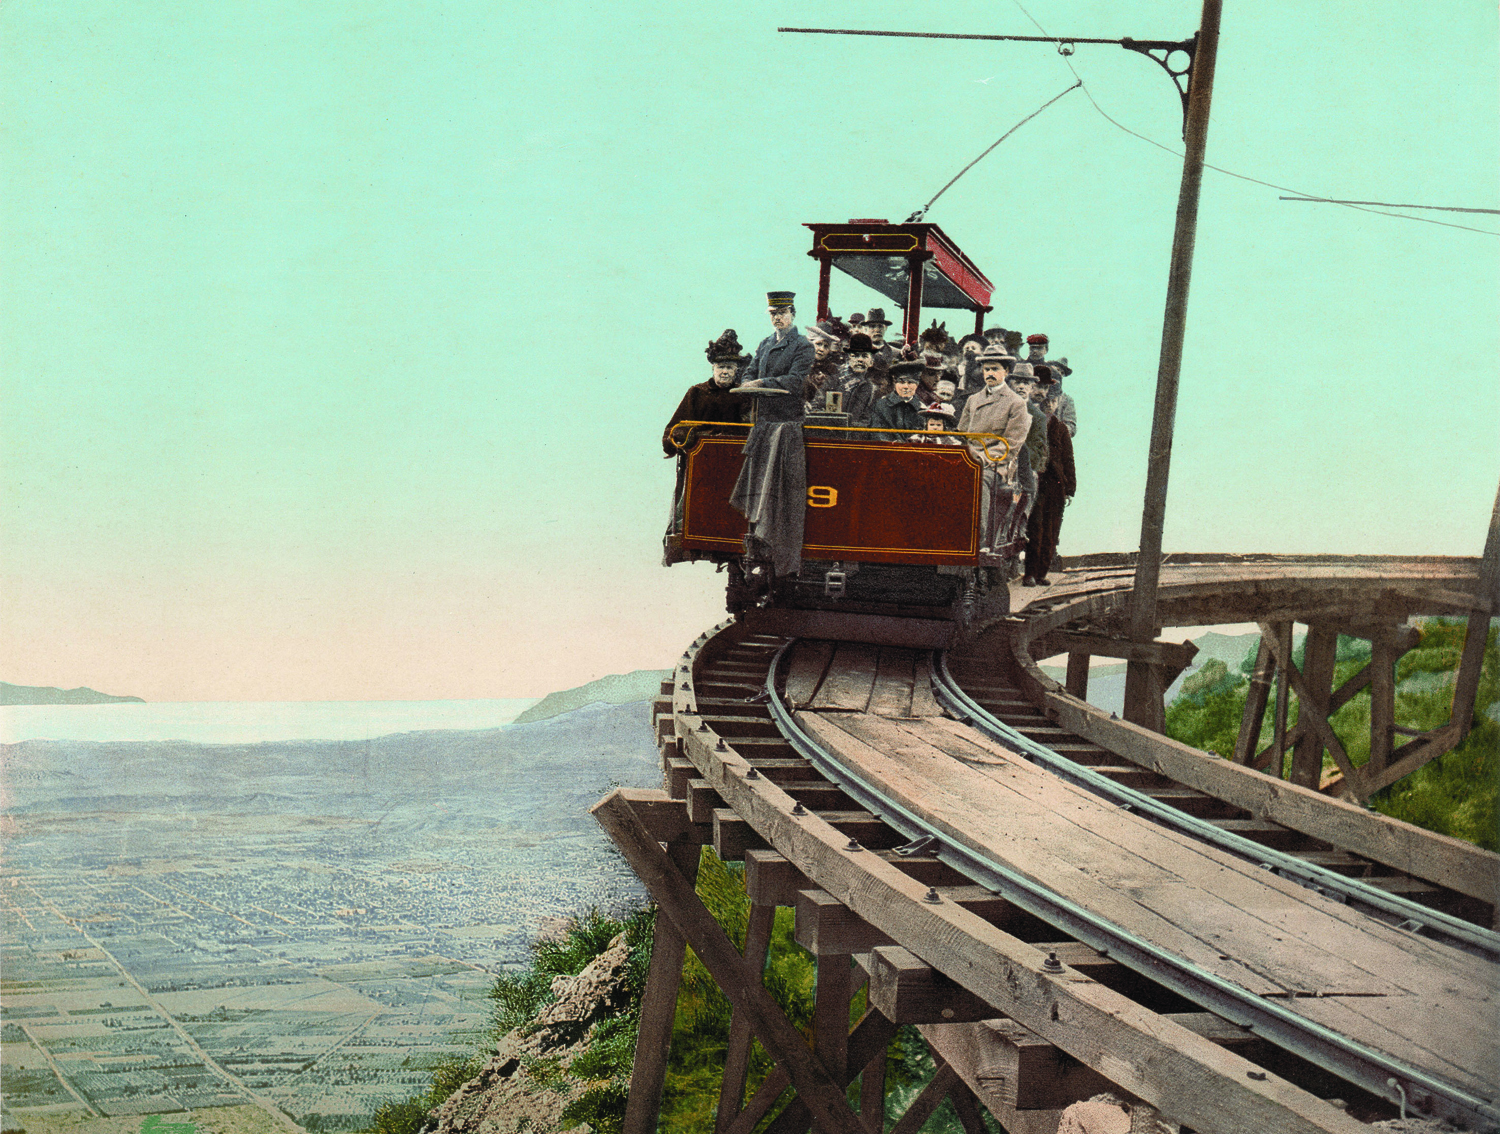 Mount Lowe Railway, on the circular bridge, California, photochrom.